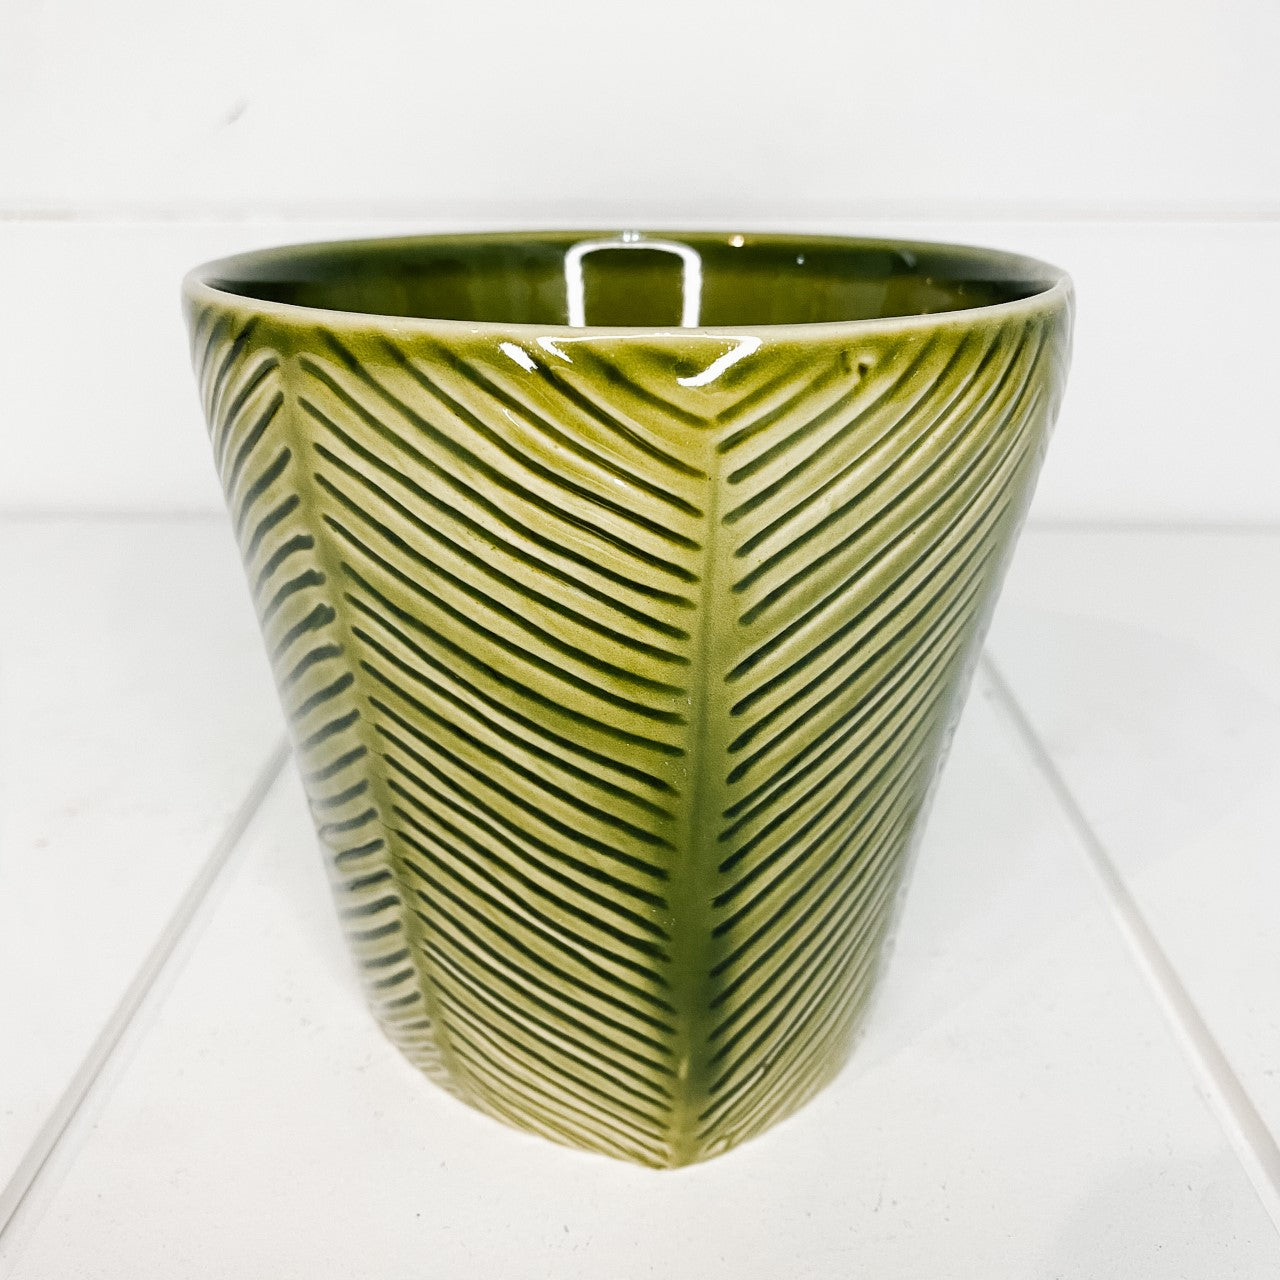 Glazed ceramic plant pot